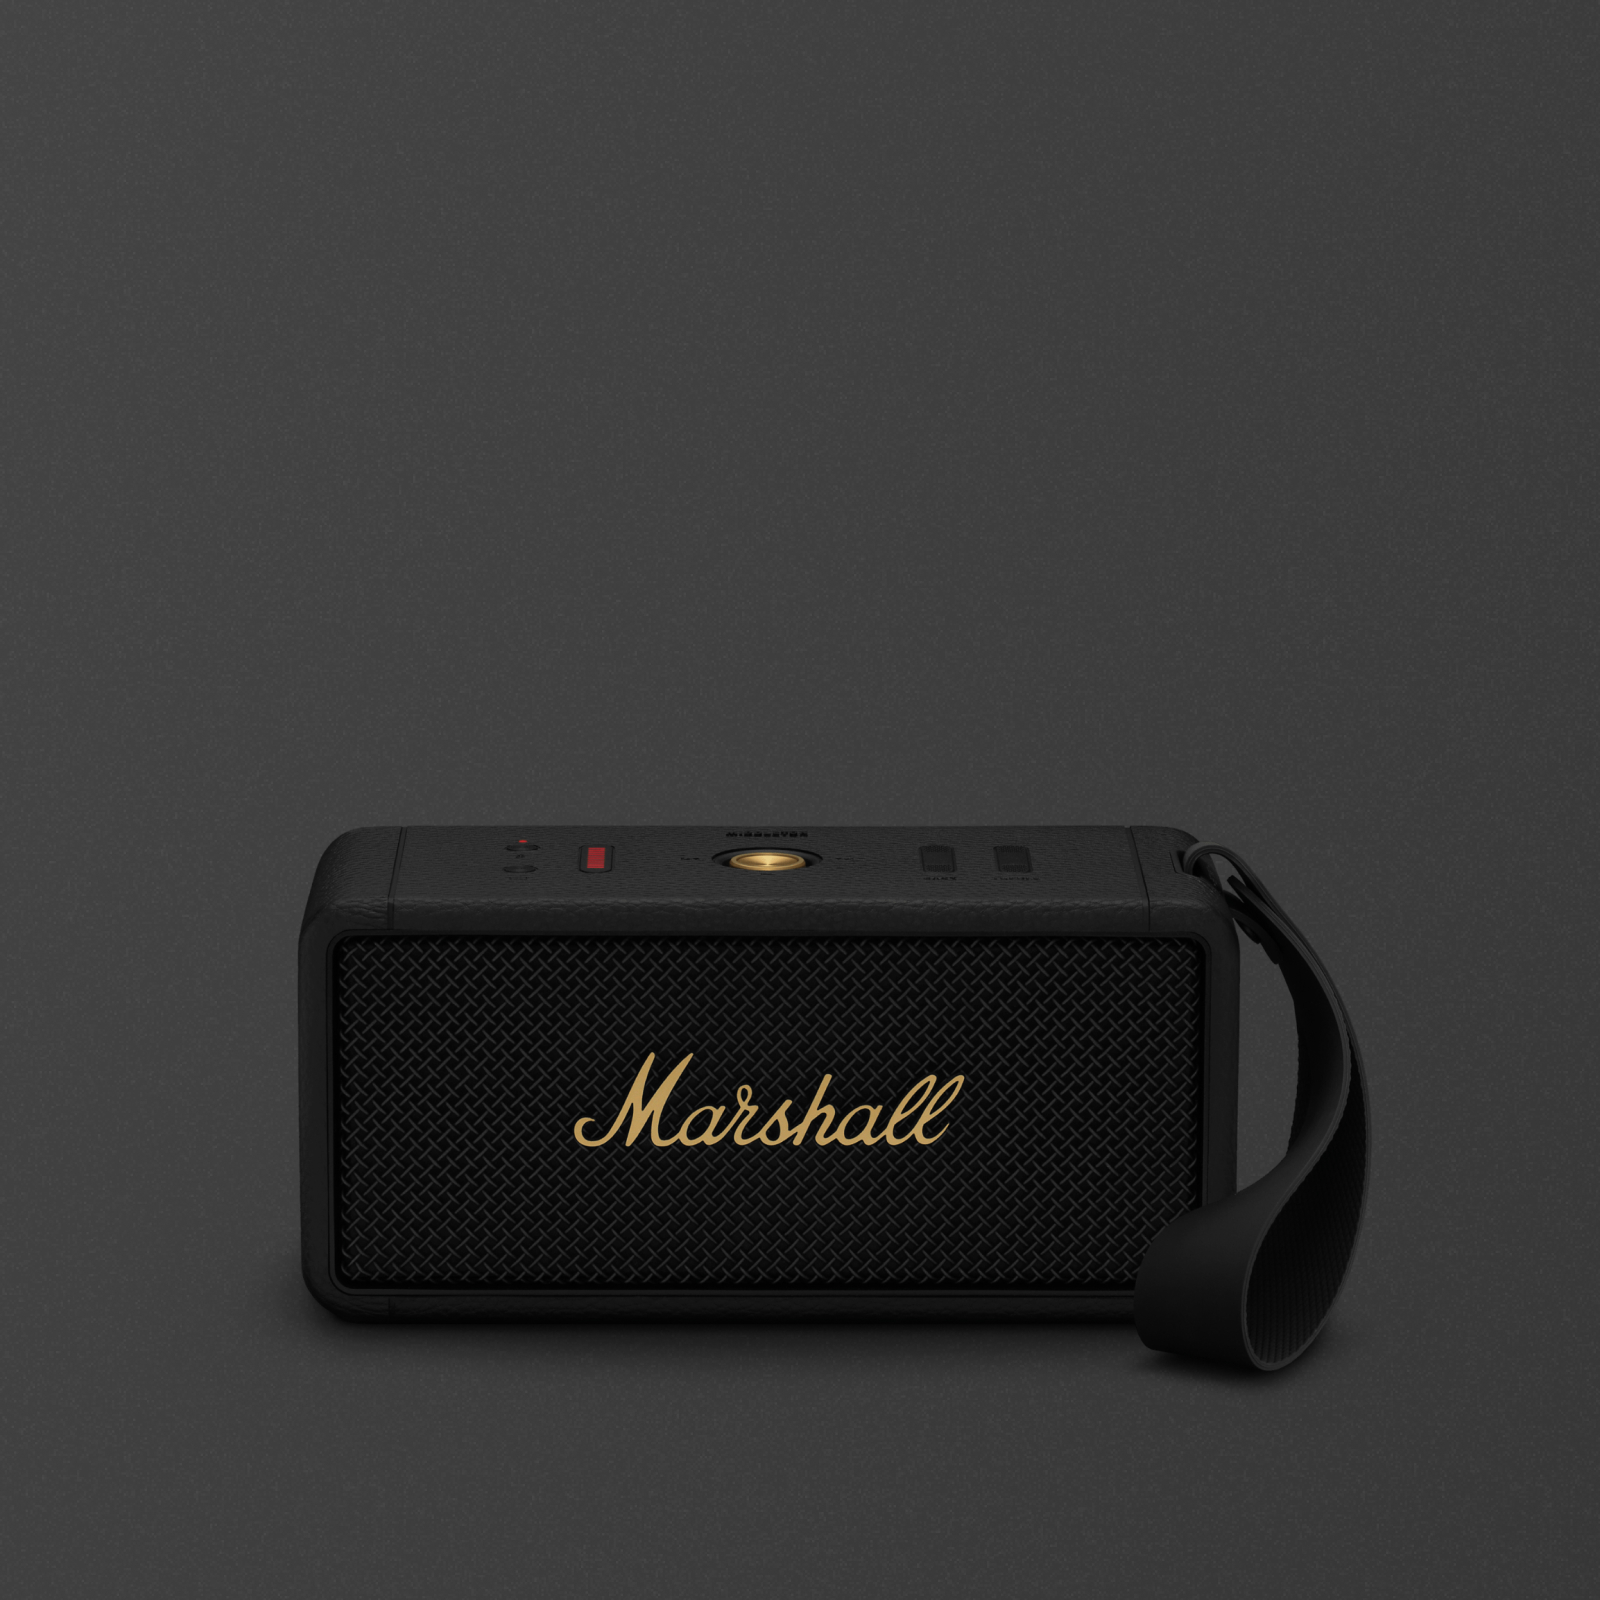 Portable Middleton bluetooth speaker on a dark background.